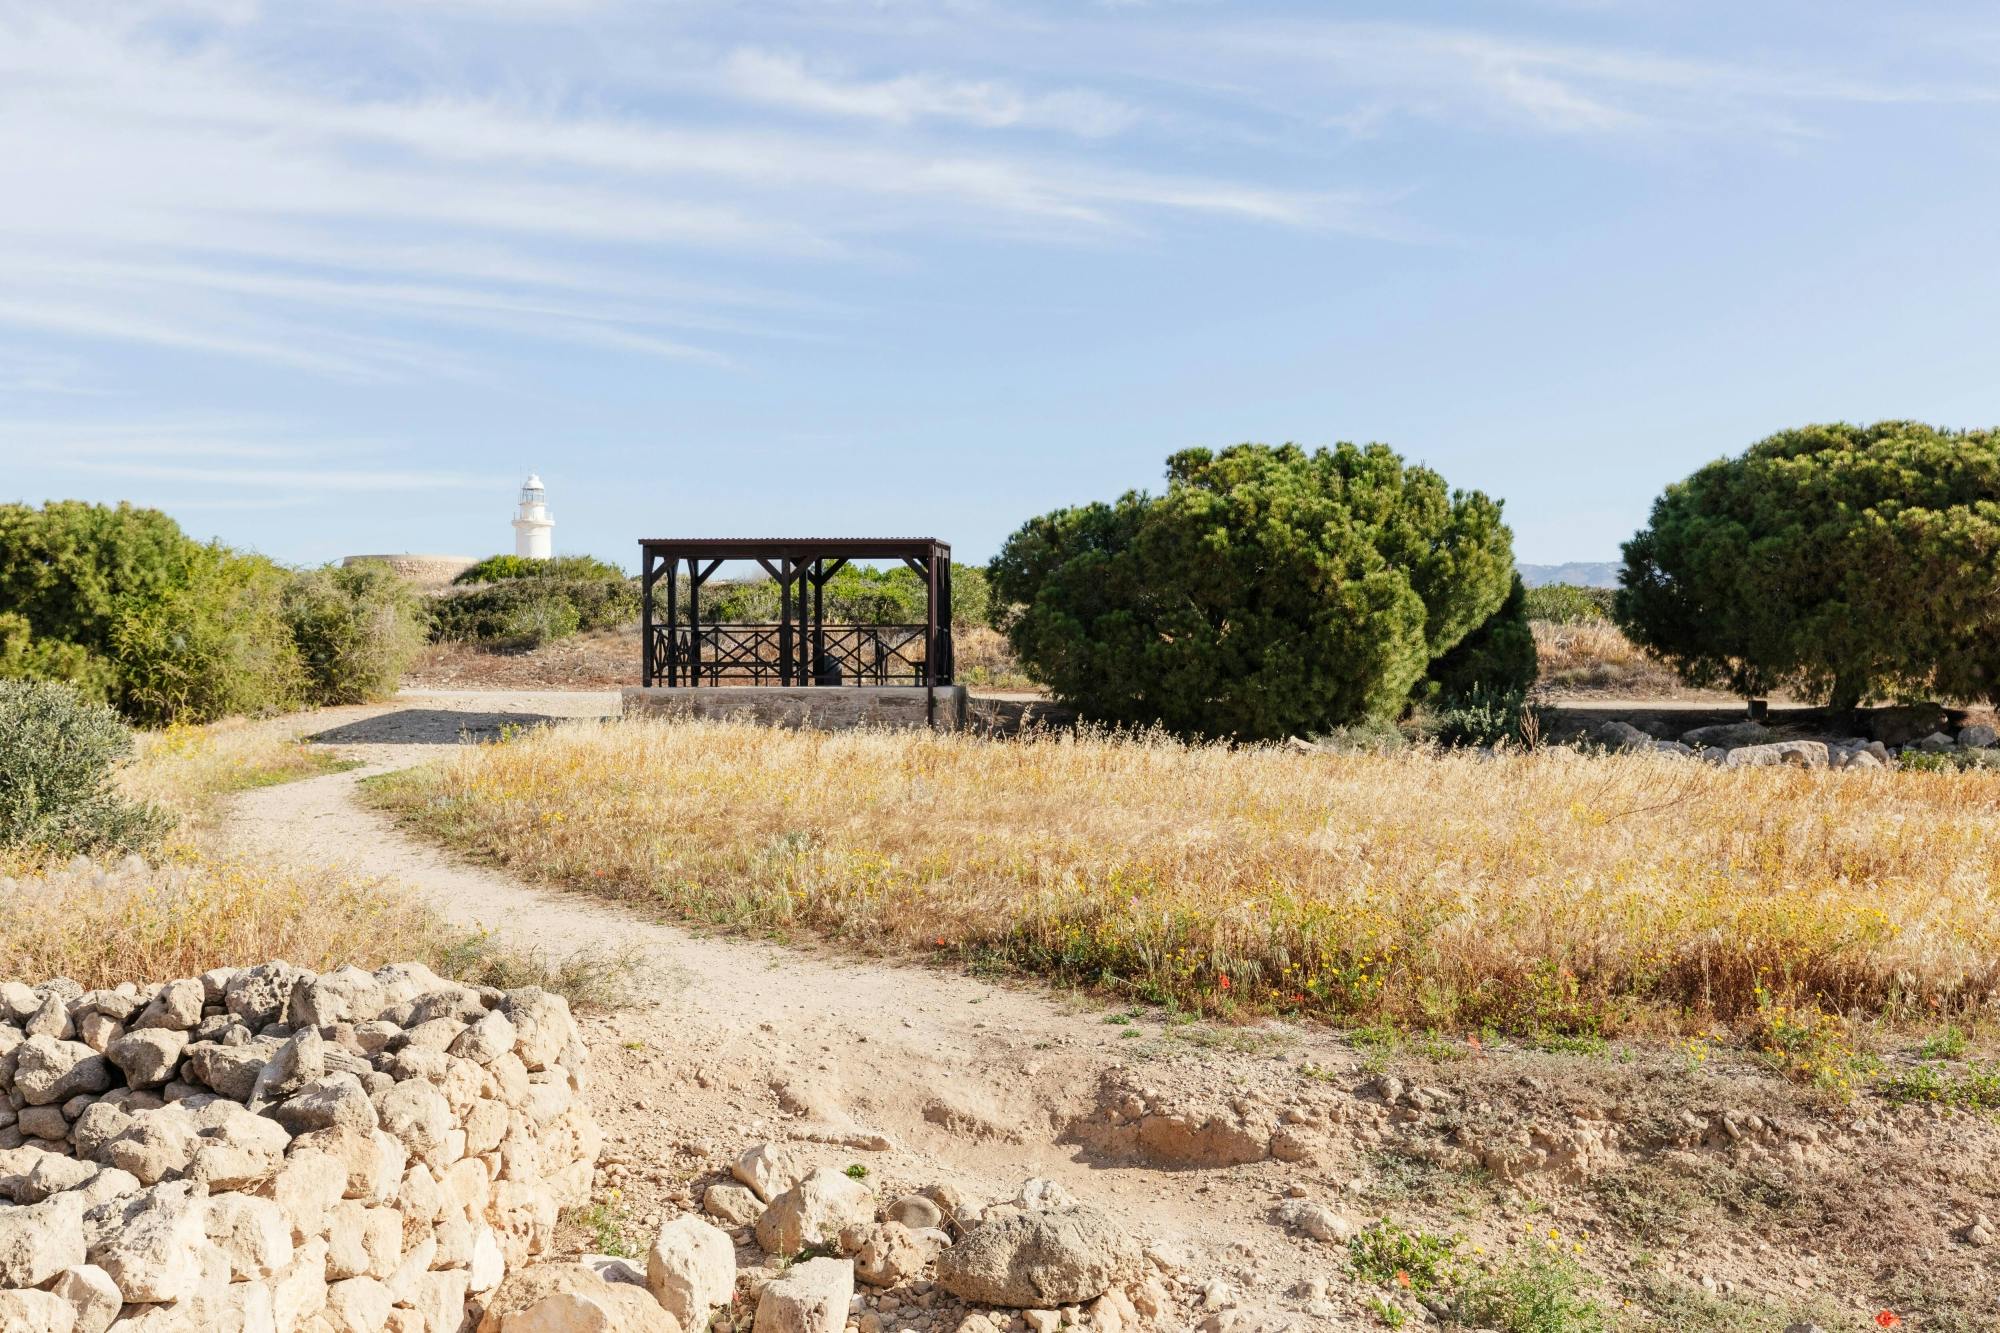 Ancient Kourion Tour with Paphos Town